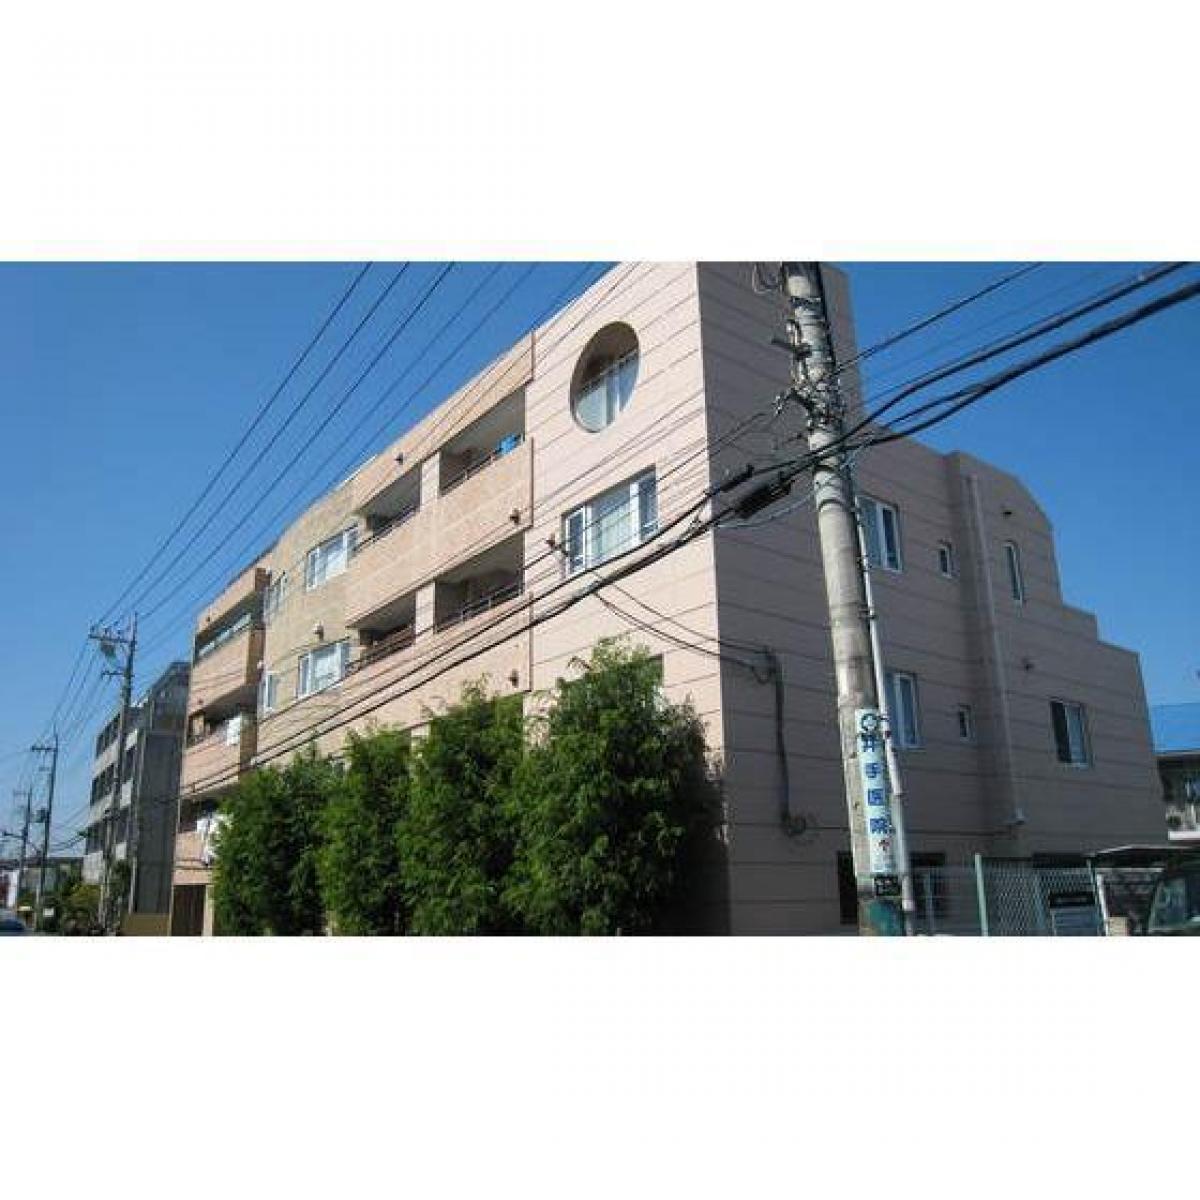 Picture of Apartment For Sale in Fuchu Shi, Hiroshima, Japan